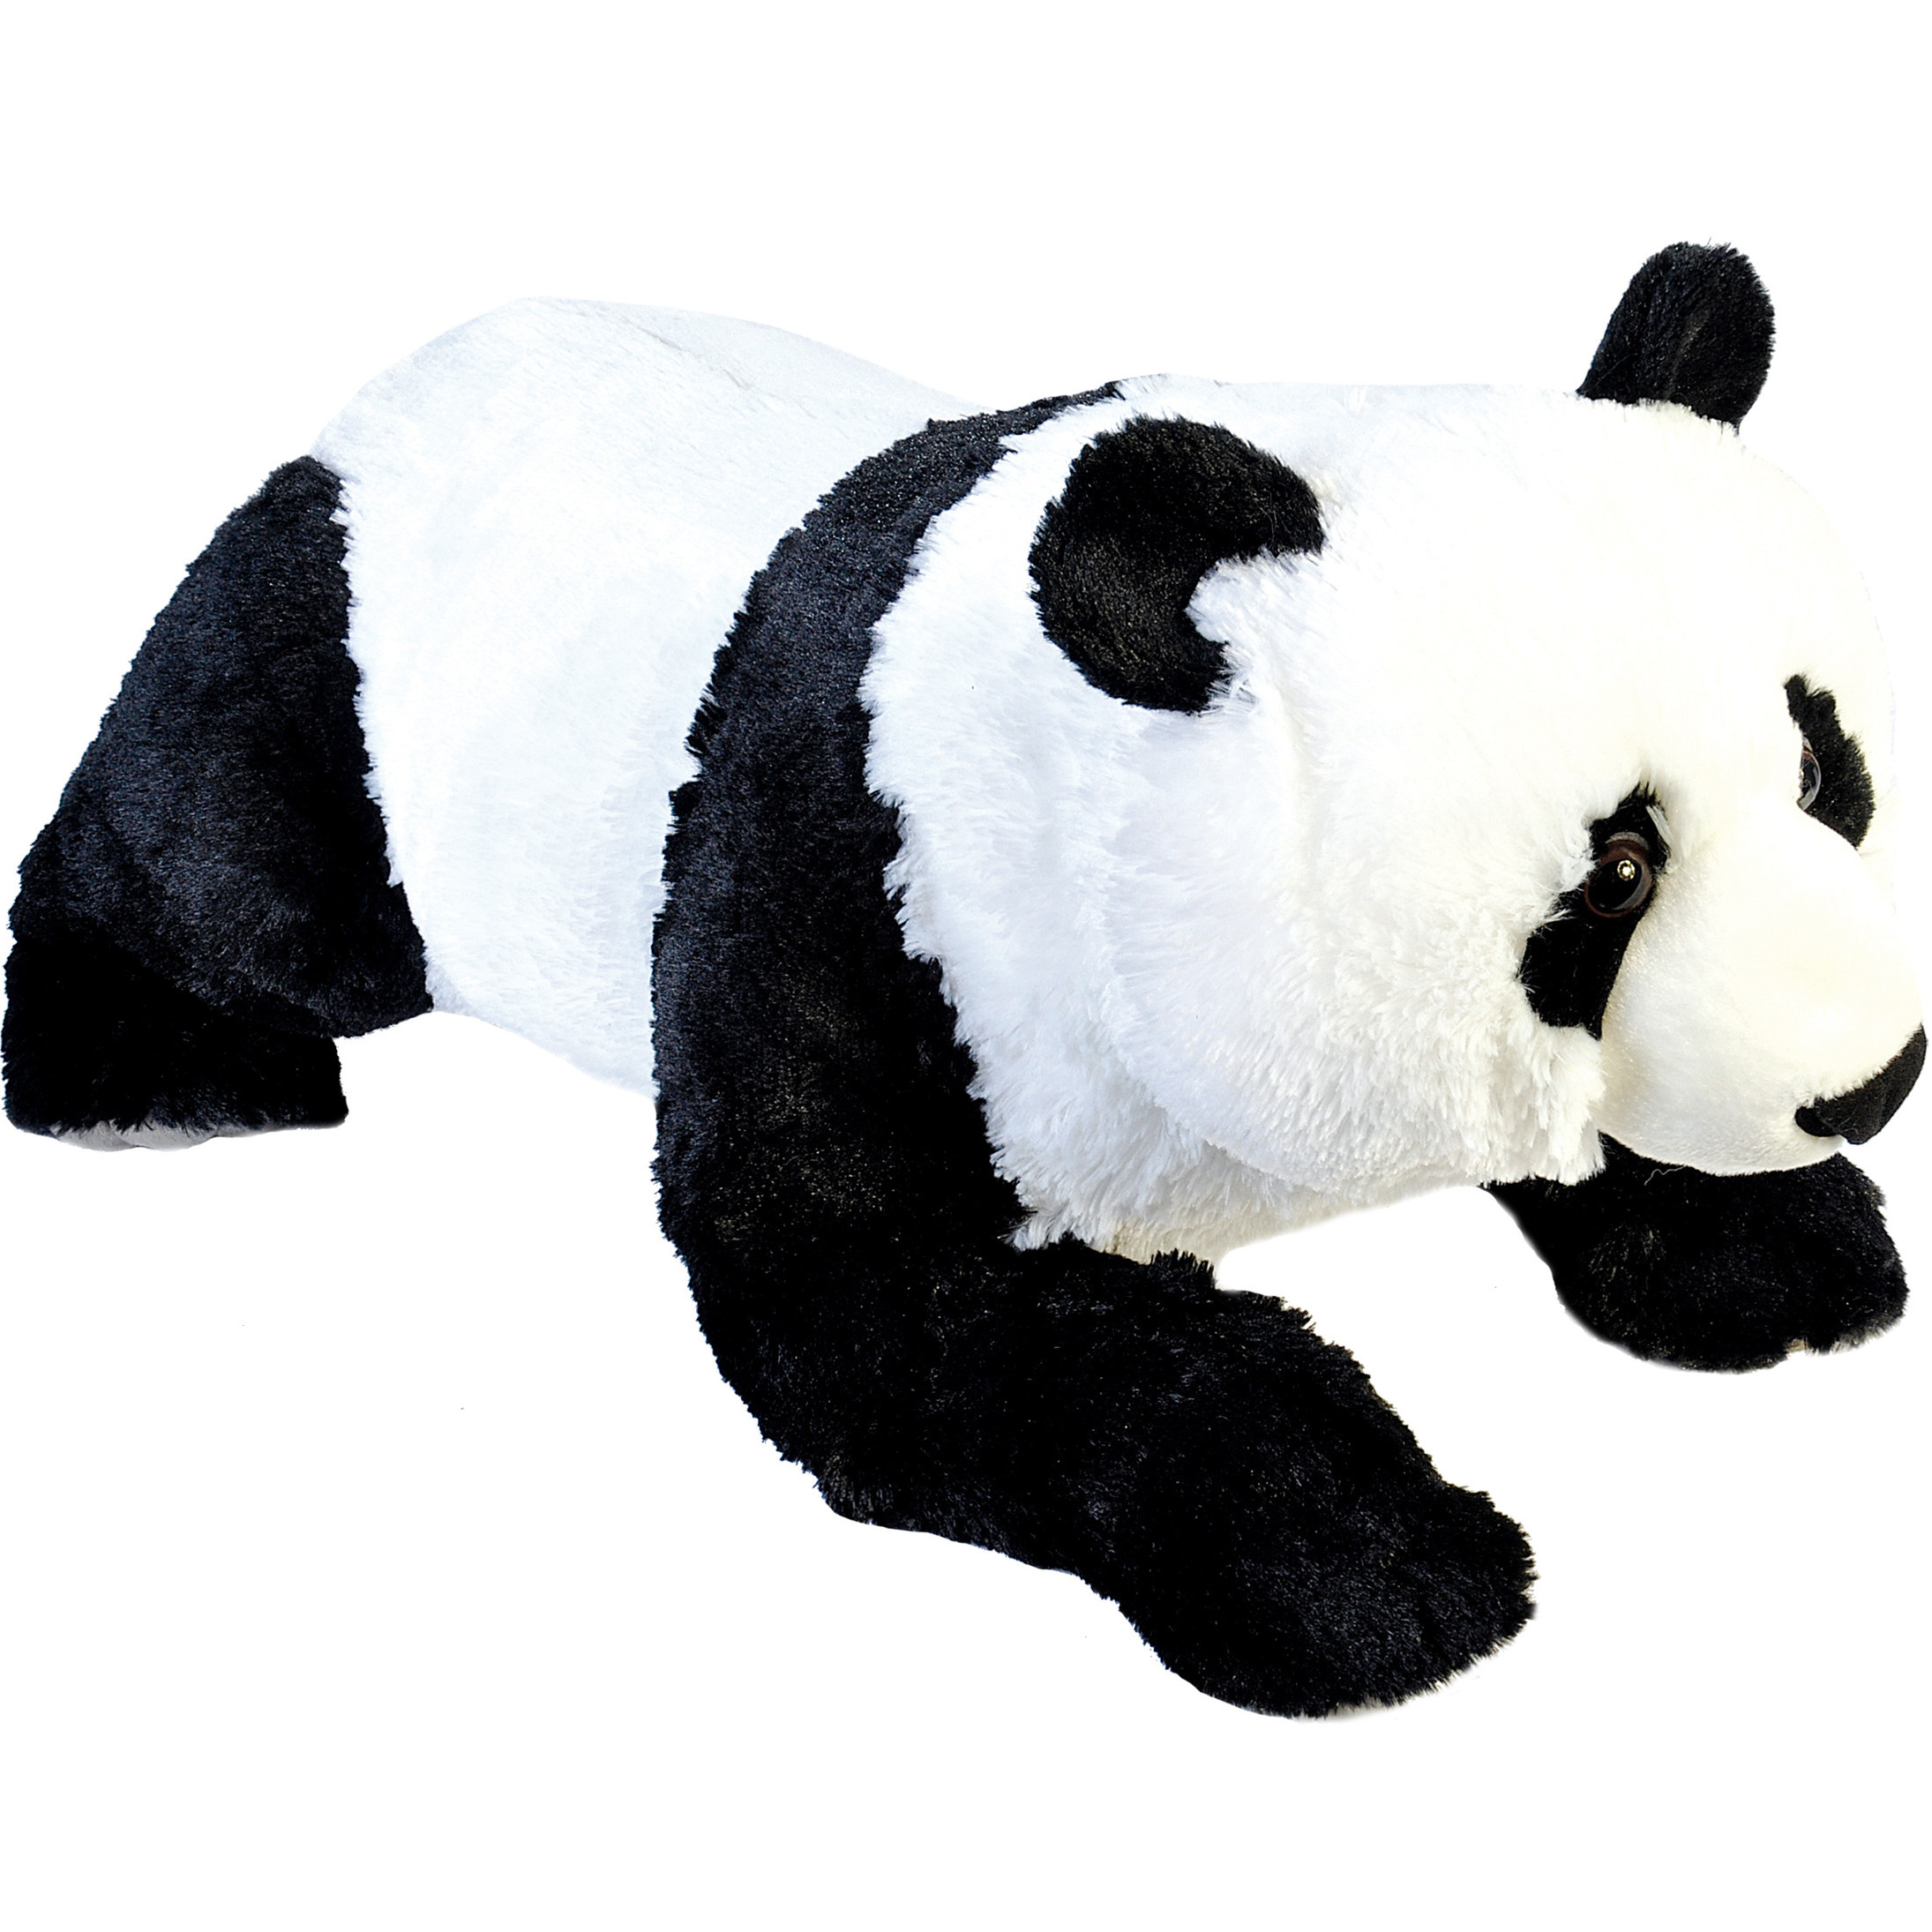 Grote knuffel panda liggend 76 cm